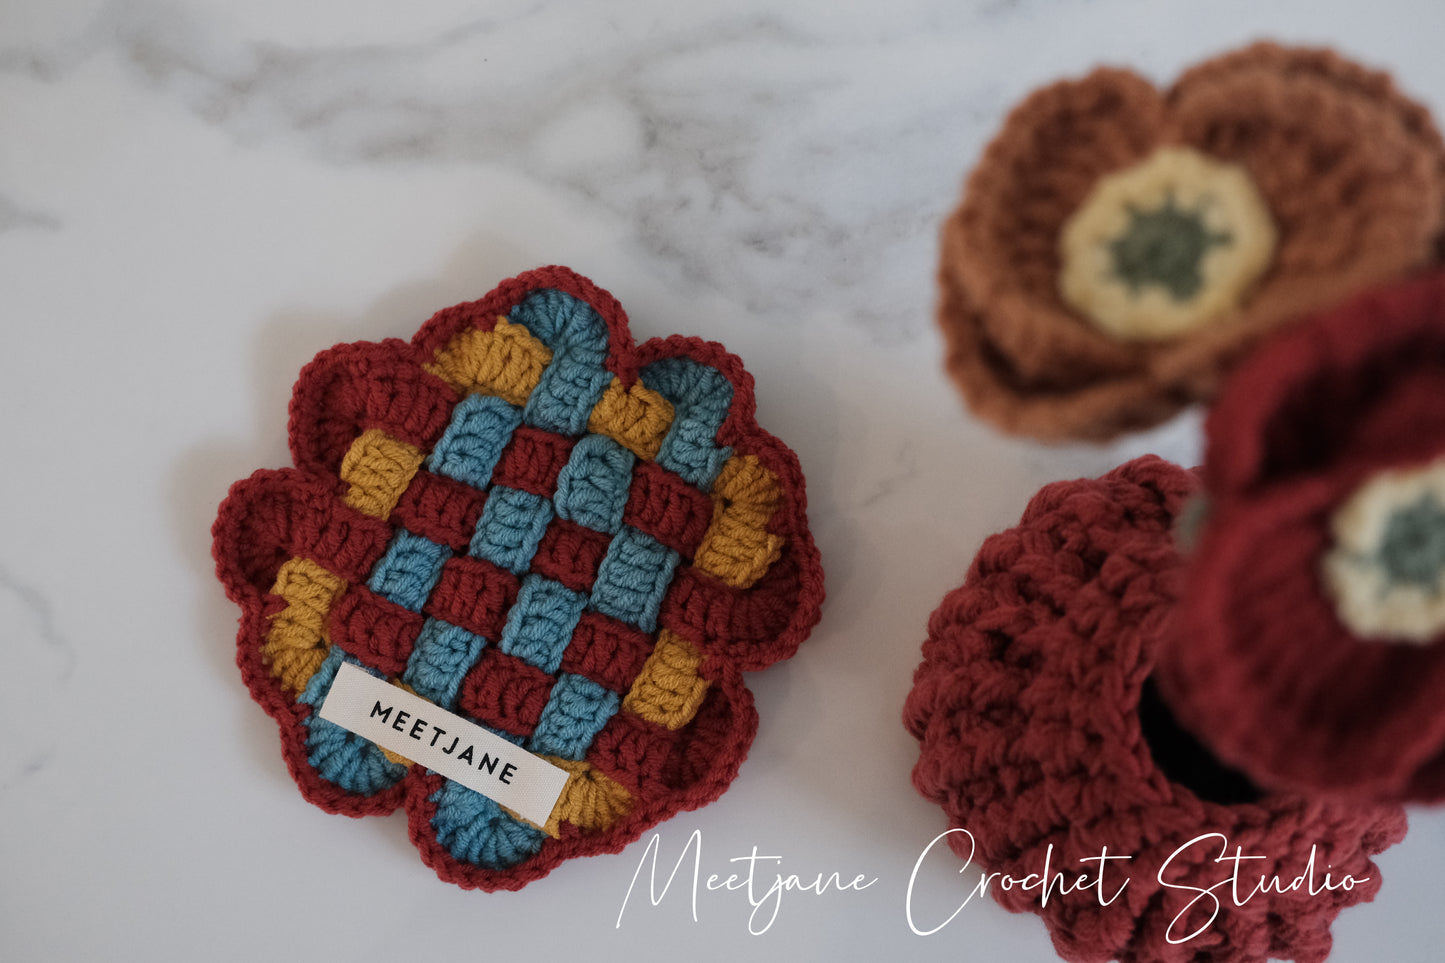 Crochet Workshop| Learn to crochet Chinese New Year Coaster|Beginner friendly